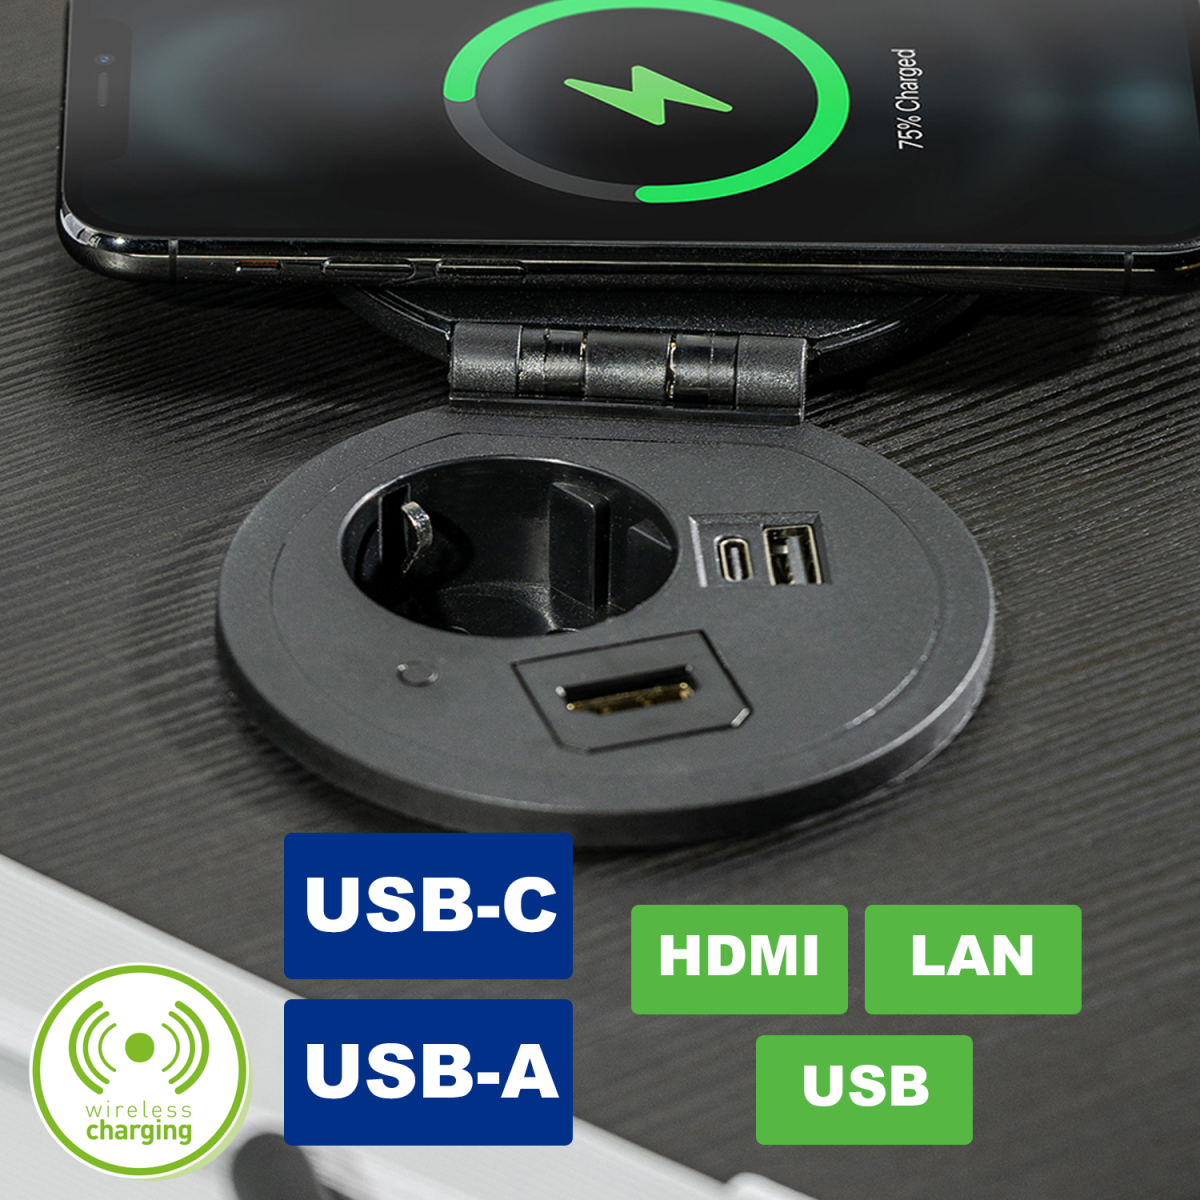 https://asvendo.de/media/image/product/671/lg/runde-tischeinbausteckdose-mit-usb-a-usb-c-und-wireless-charge-oberflaeche.png